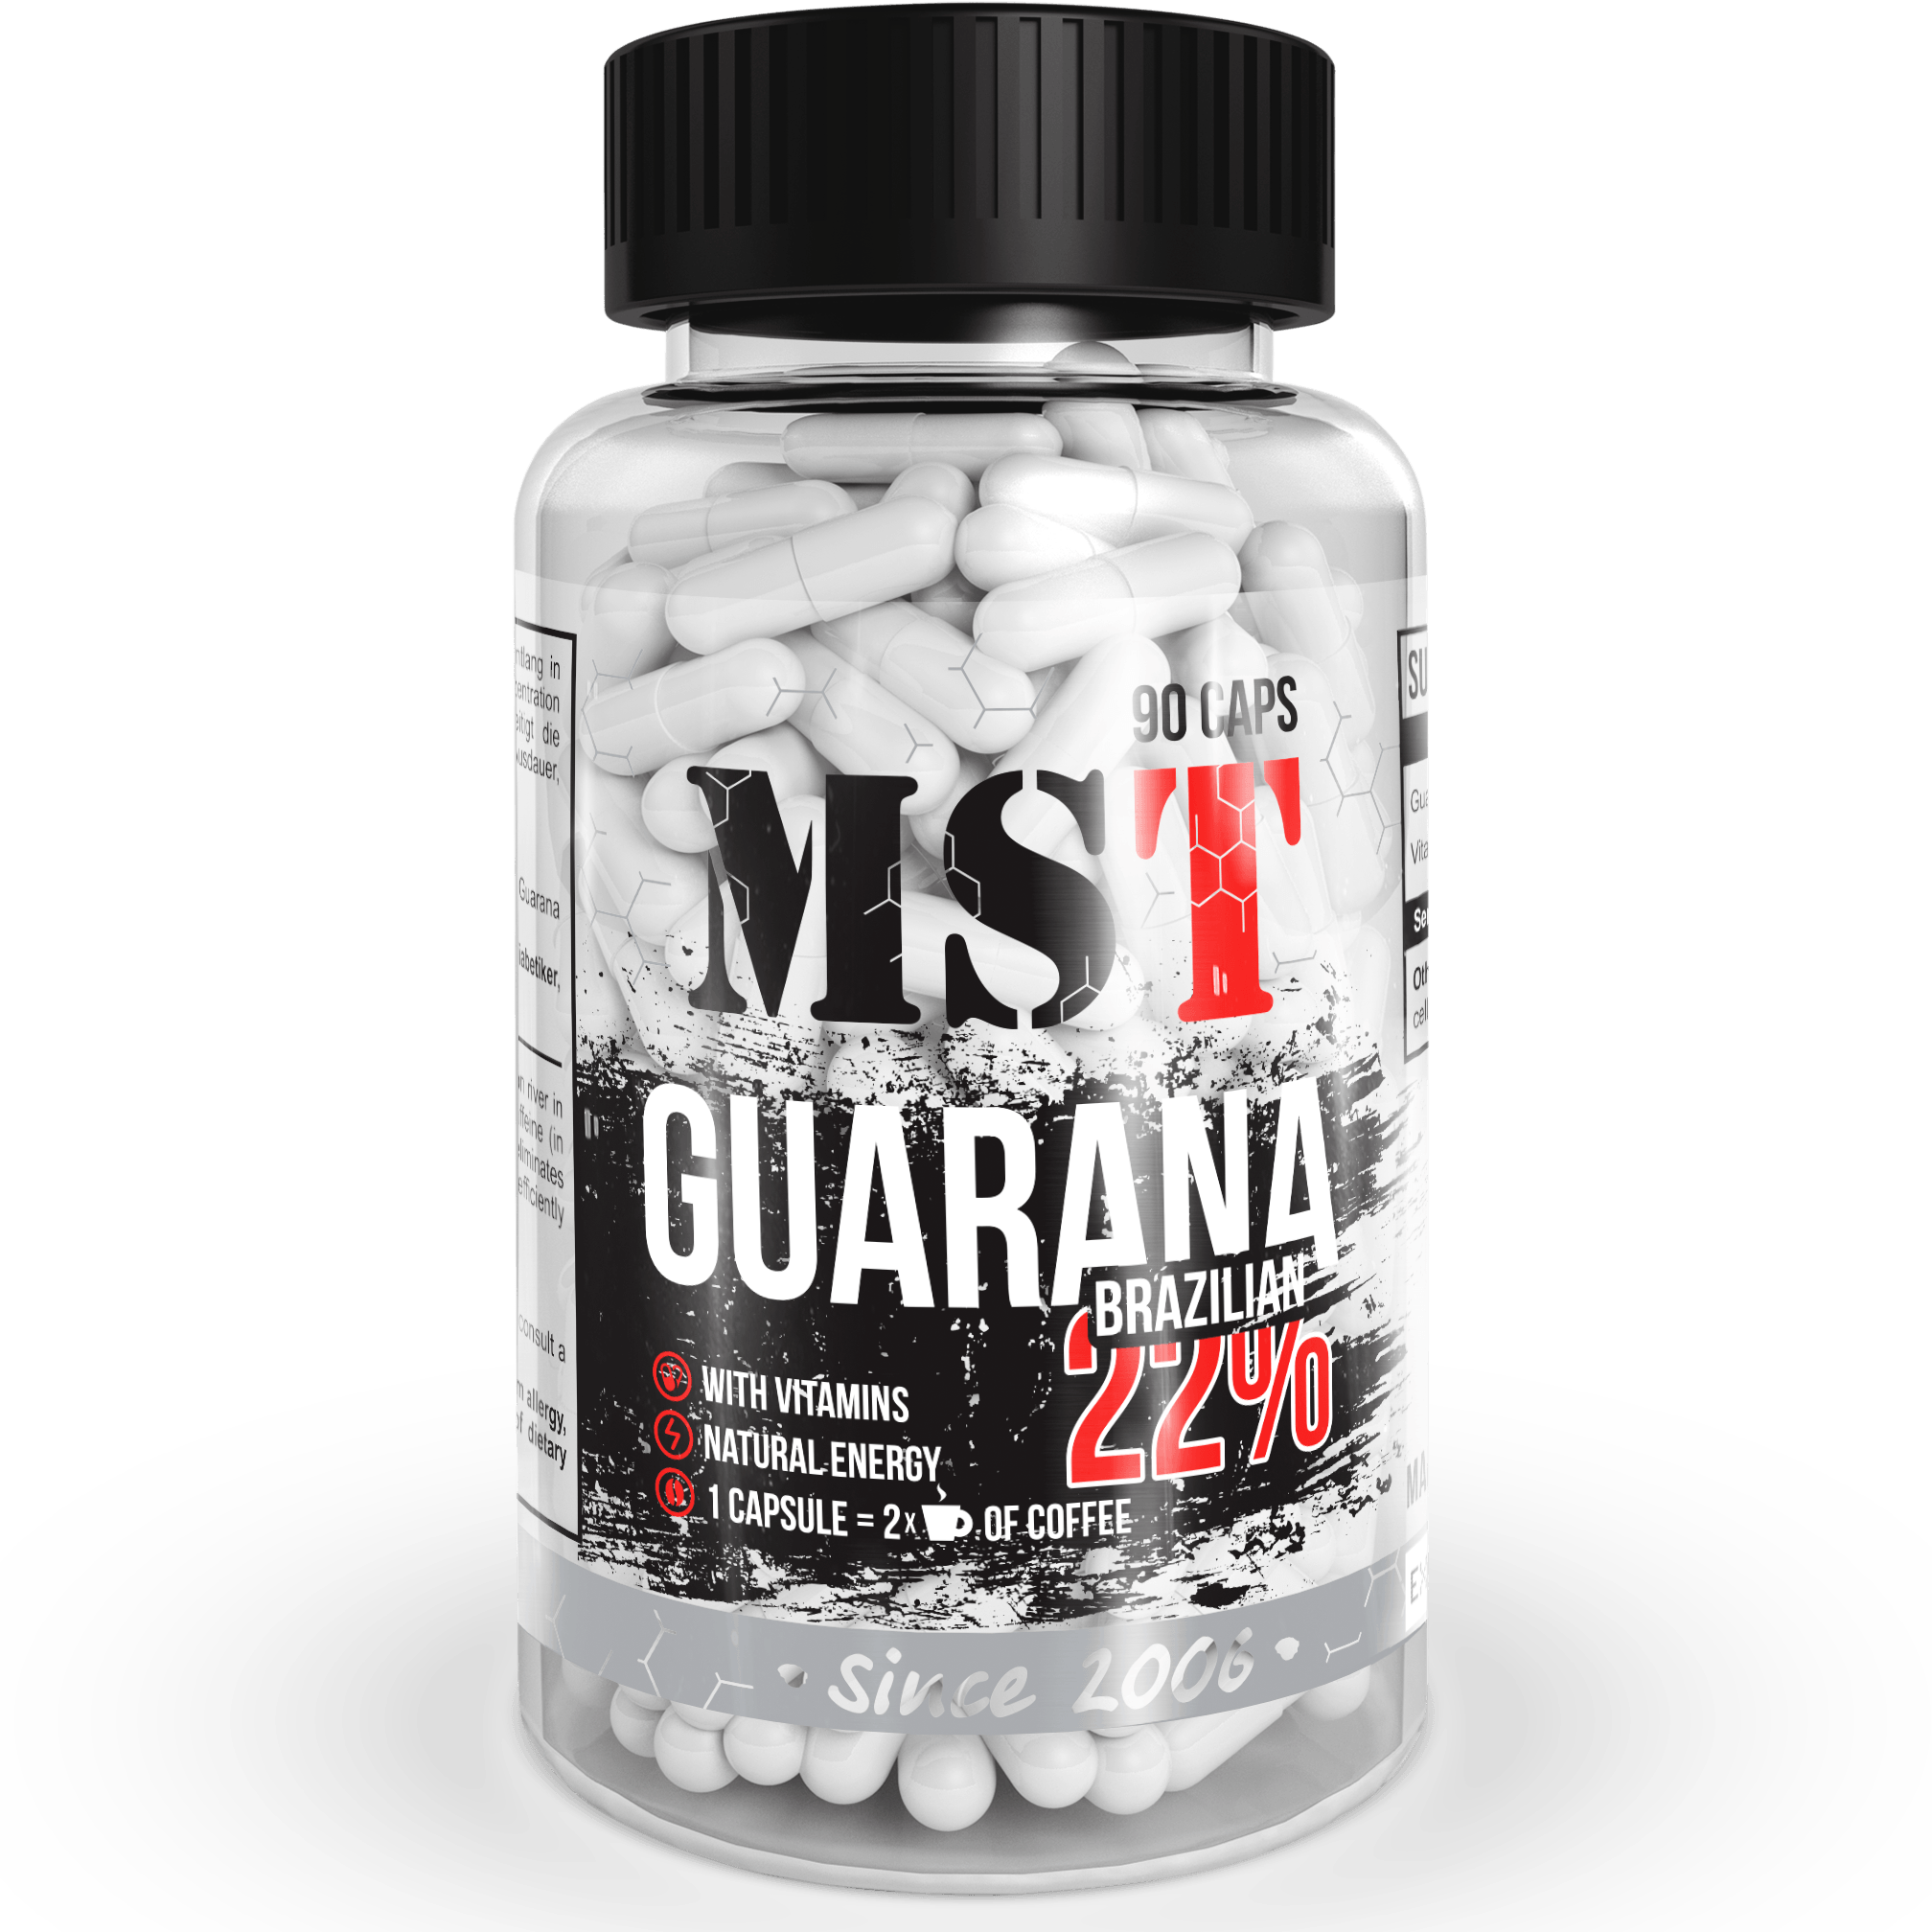 MST Nutrition Guarana 22% Brazilian, , 90 piezas